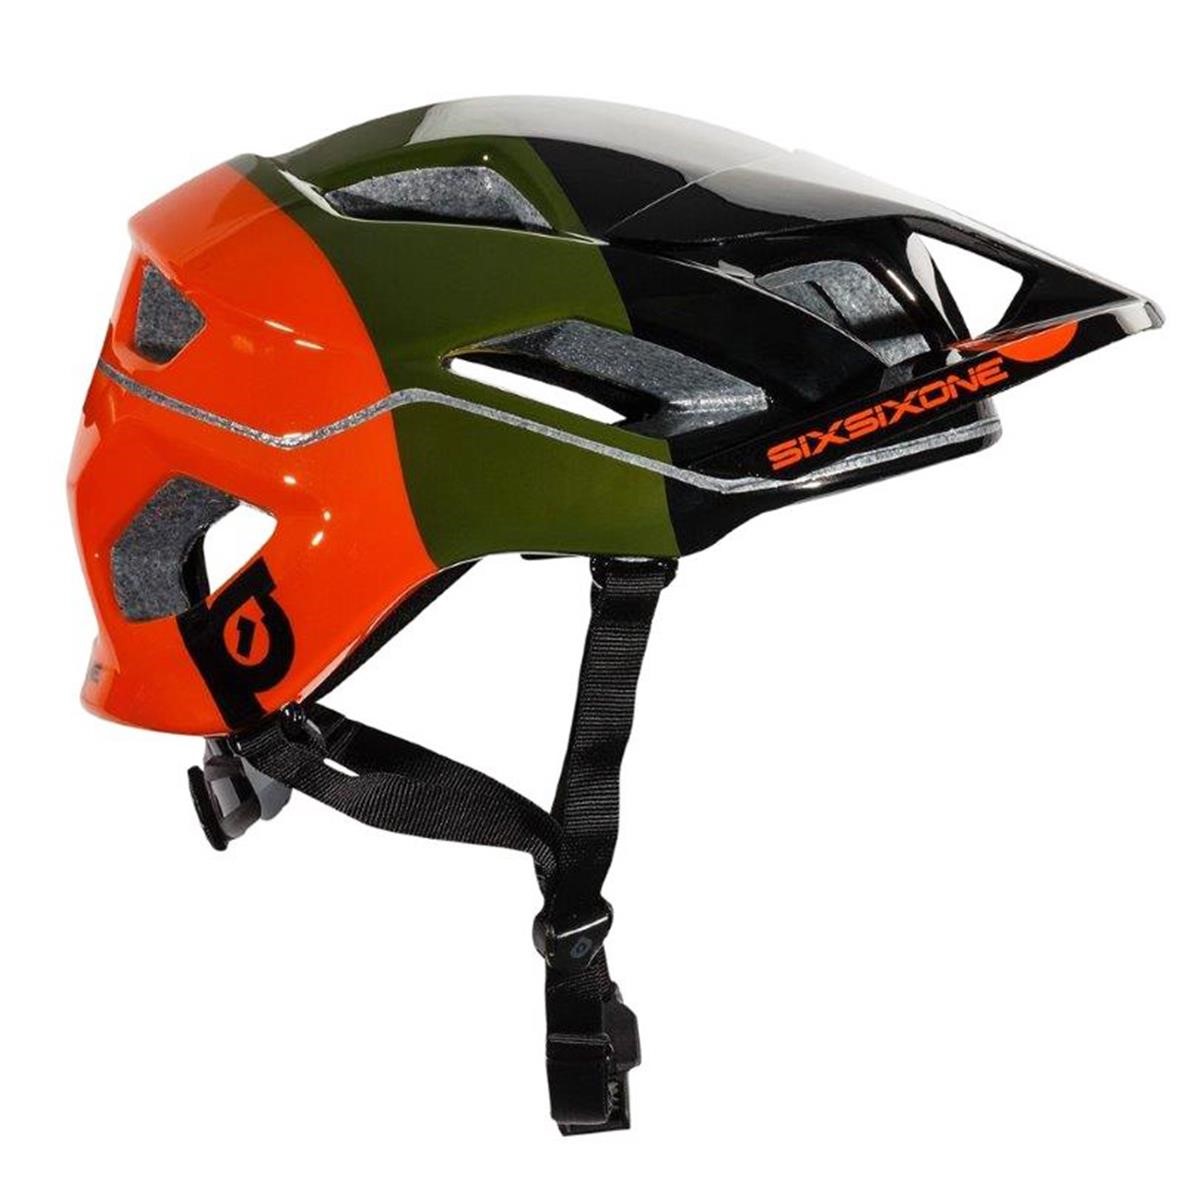 SixSixOne Enduro-MTB Helmet Evo AM Army